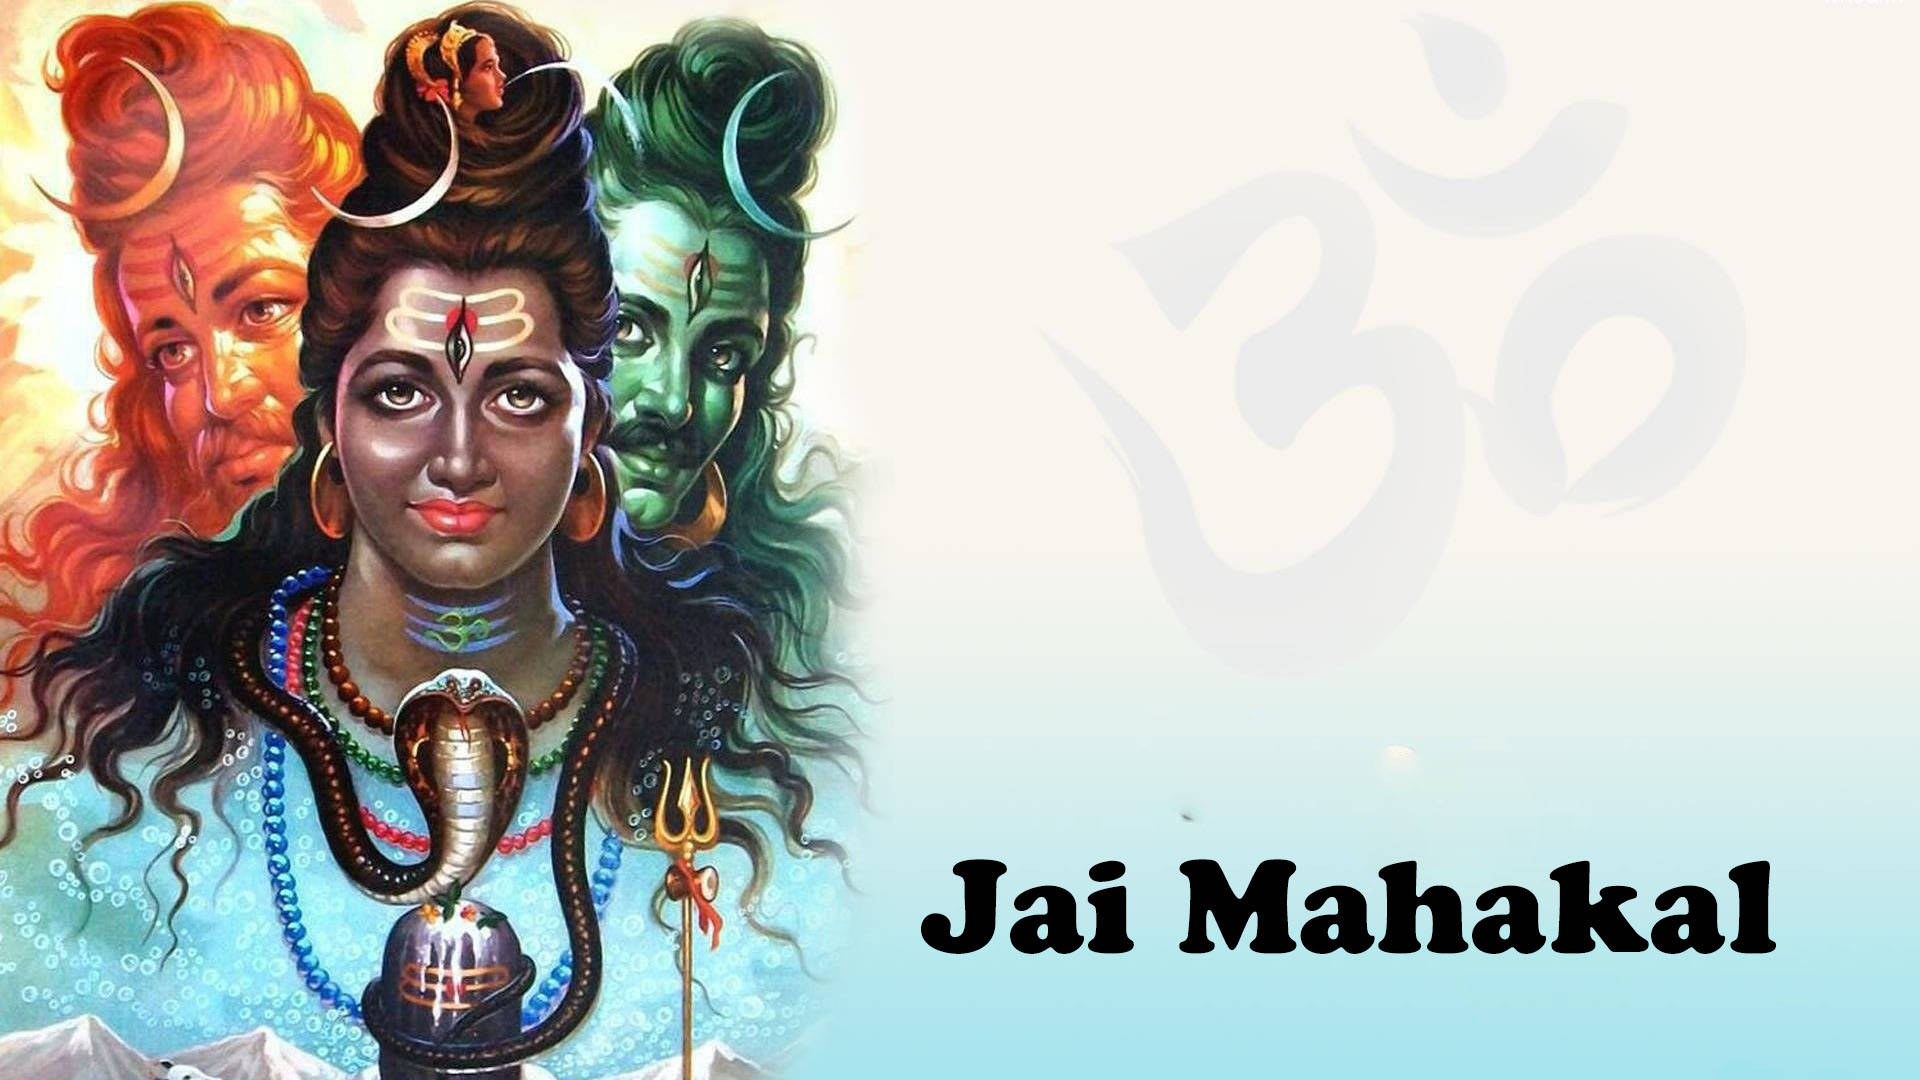 Free Mahakal Hd Wallpaper Downloads, [100+] Mahakal Hd Wallpapers for FREE  